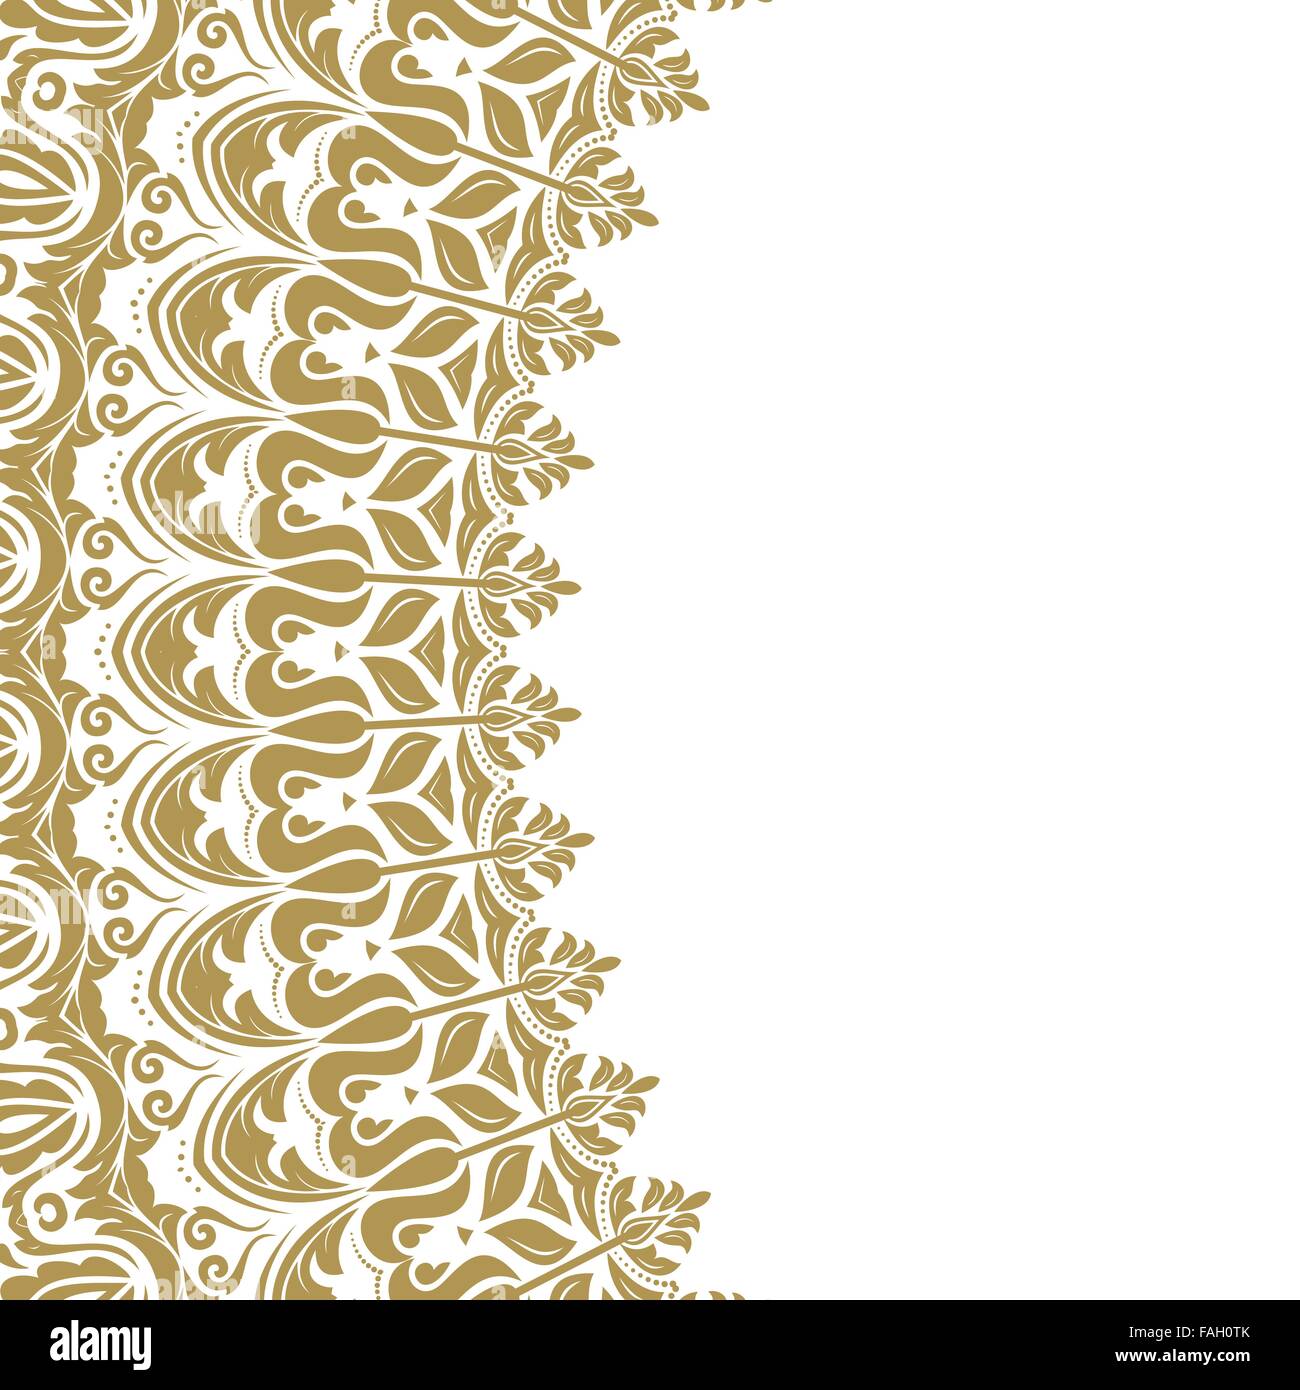 Gold Lace Borders: Gold Border Clipart Gold Lace Trim, Golden